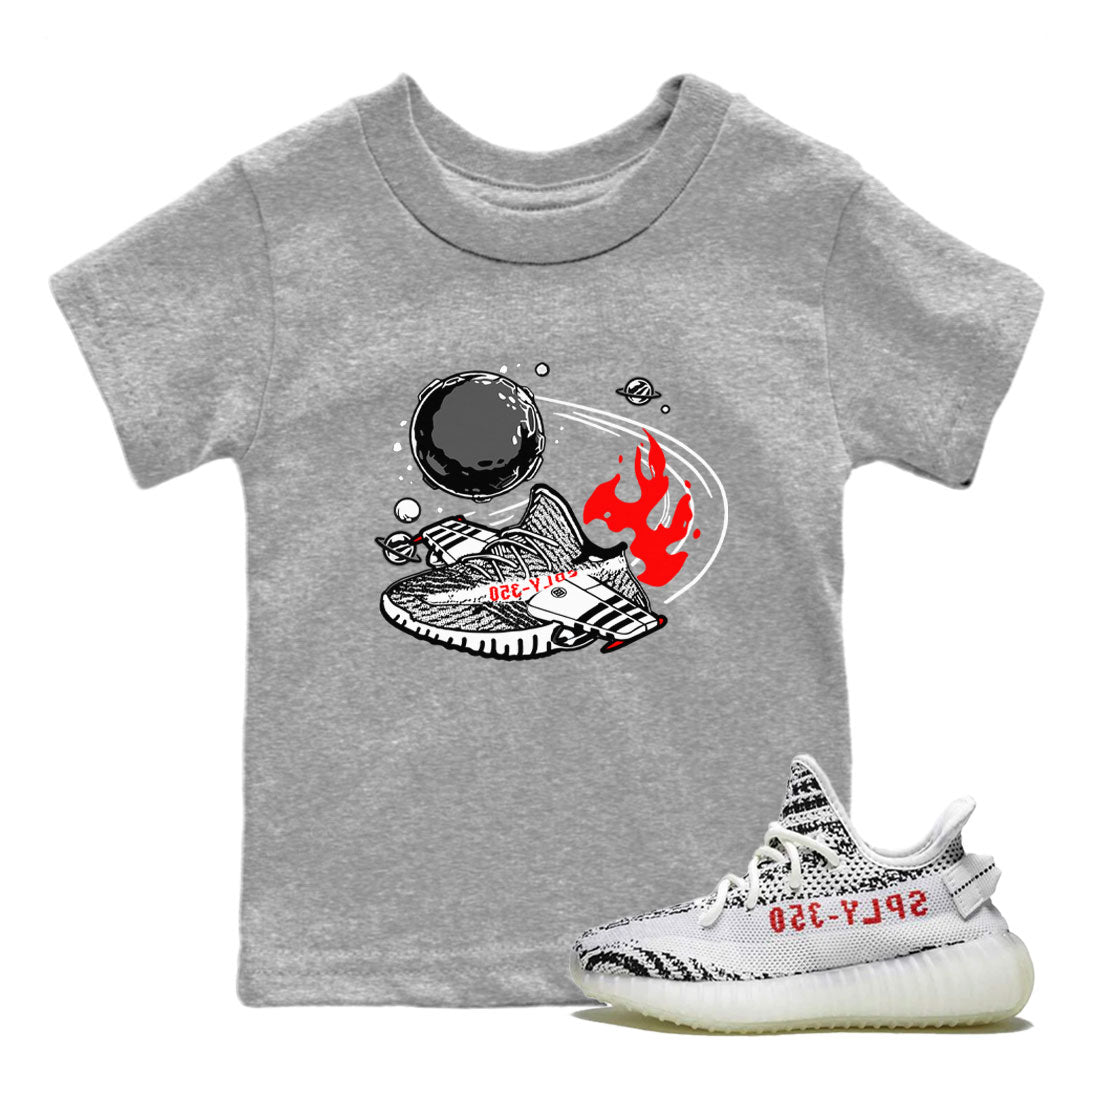 Yeezy 350 Zebra shirt to match Yeezys Rocket Boost Streetwear Sneaker Shirt Yeezy Boost 350 V2 Zebra Drip Gear Zone Sneaker Matching Clothing Baby Toddler Heather Grey 1 T-Shirt